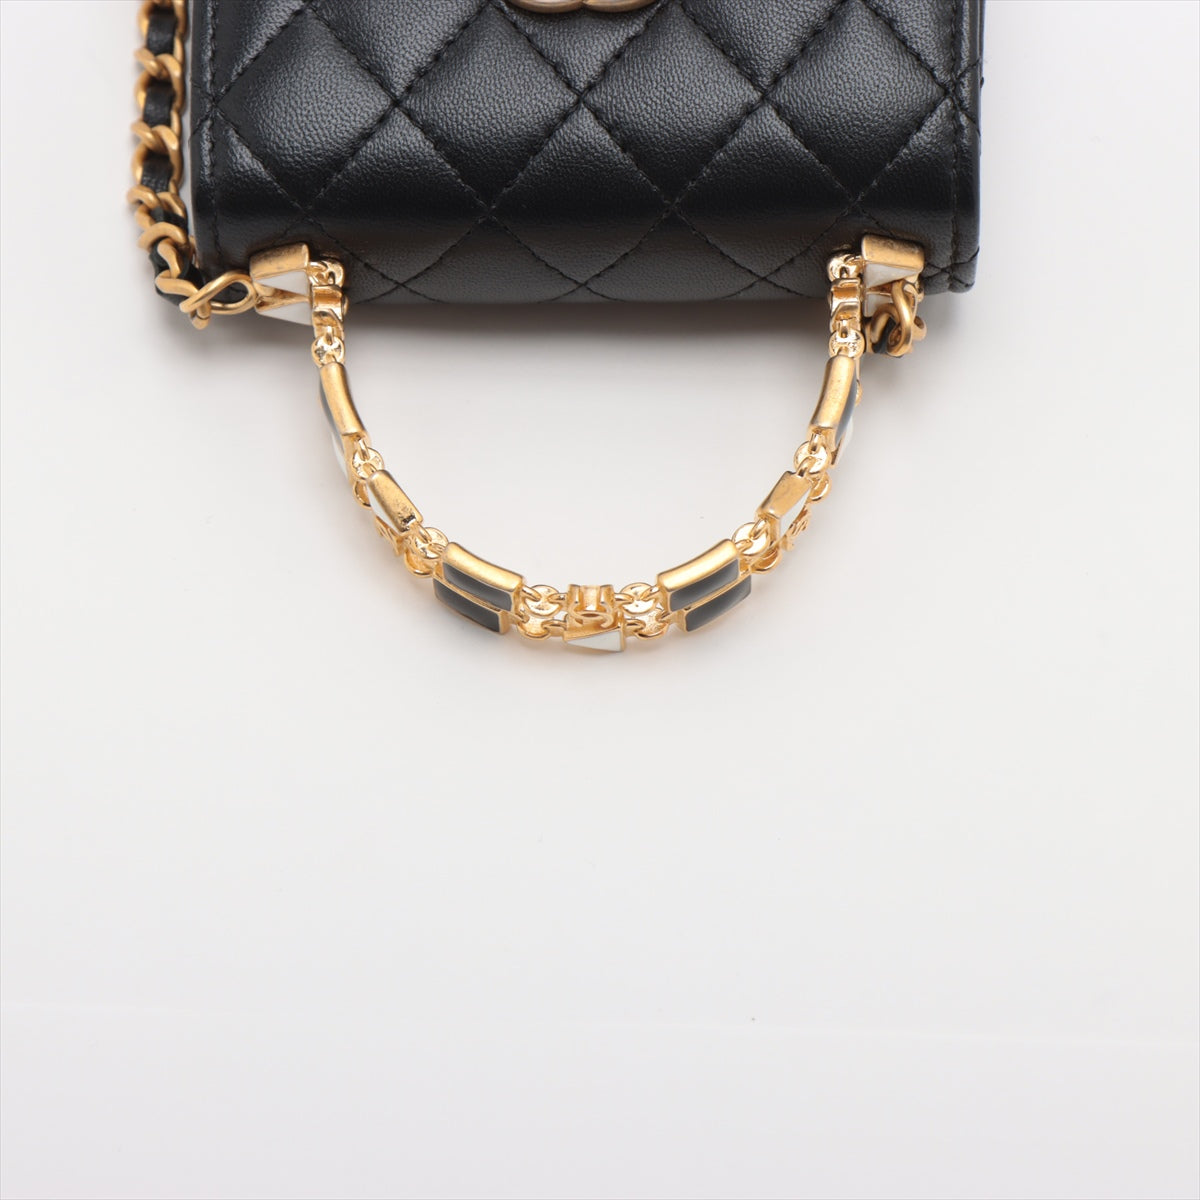 Chanel Mini Matelasse Lambskin Chain shoulder bag 2WAY Black Gold Metal fittings